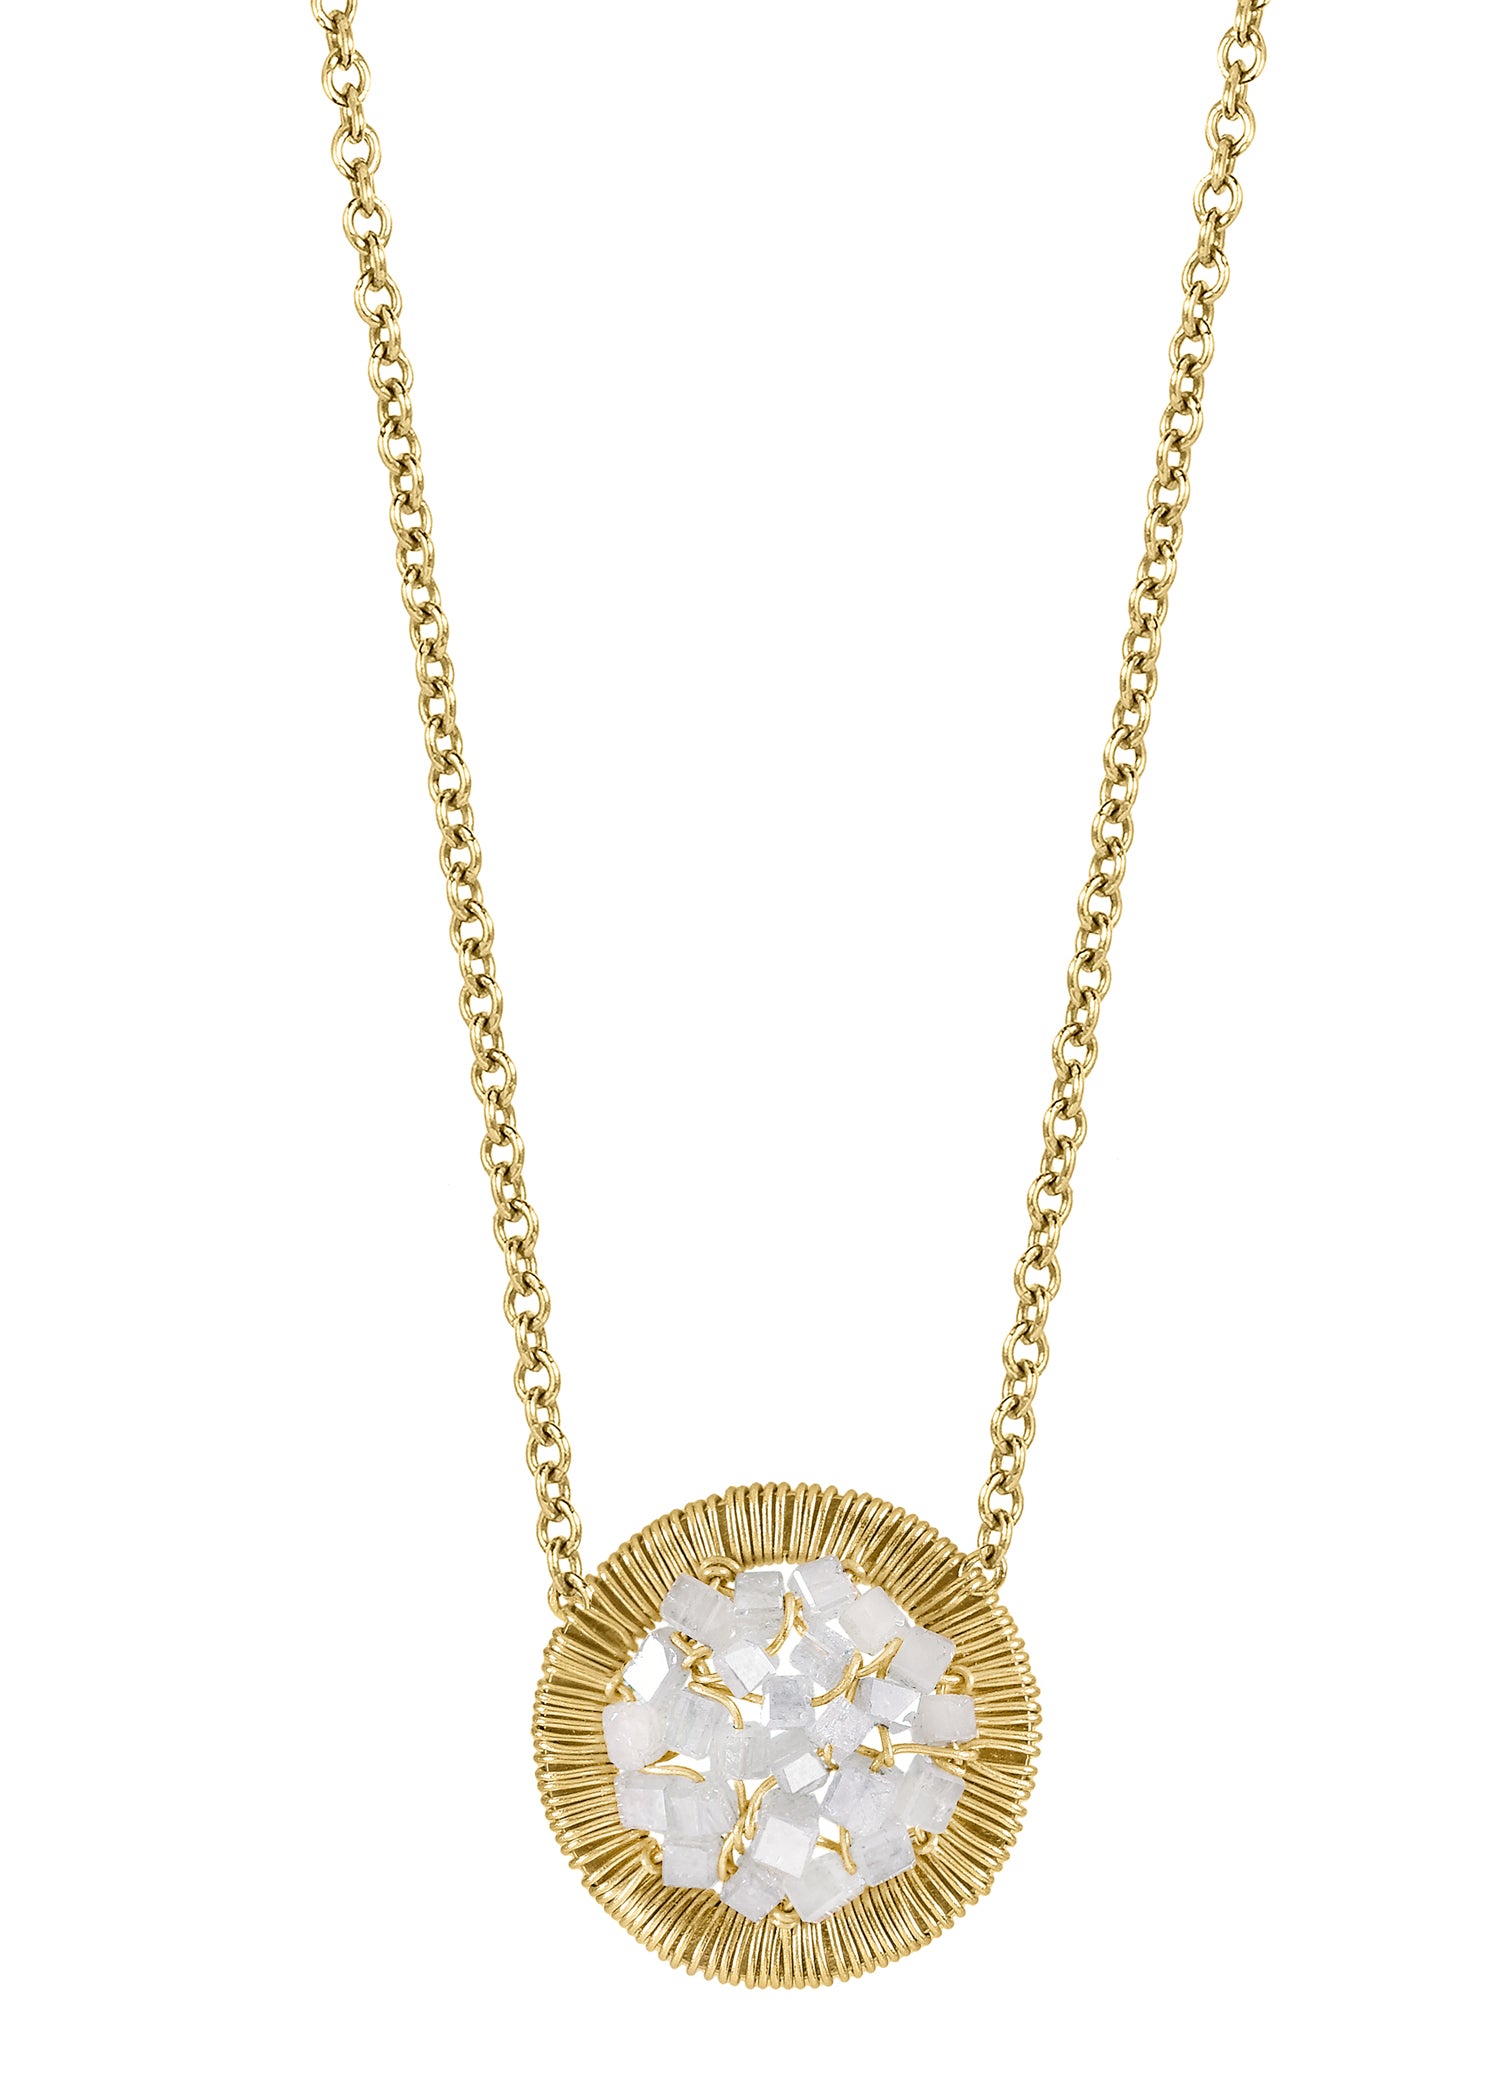 Diamond 14k gold Necklace measures 15-3/4" in length Pendant measures 1/2" in diameter Handmade in our Los Angeles studio